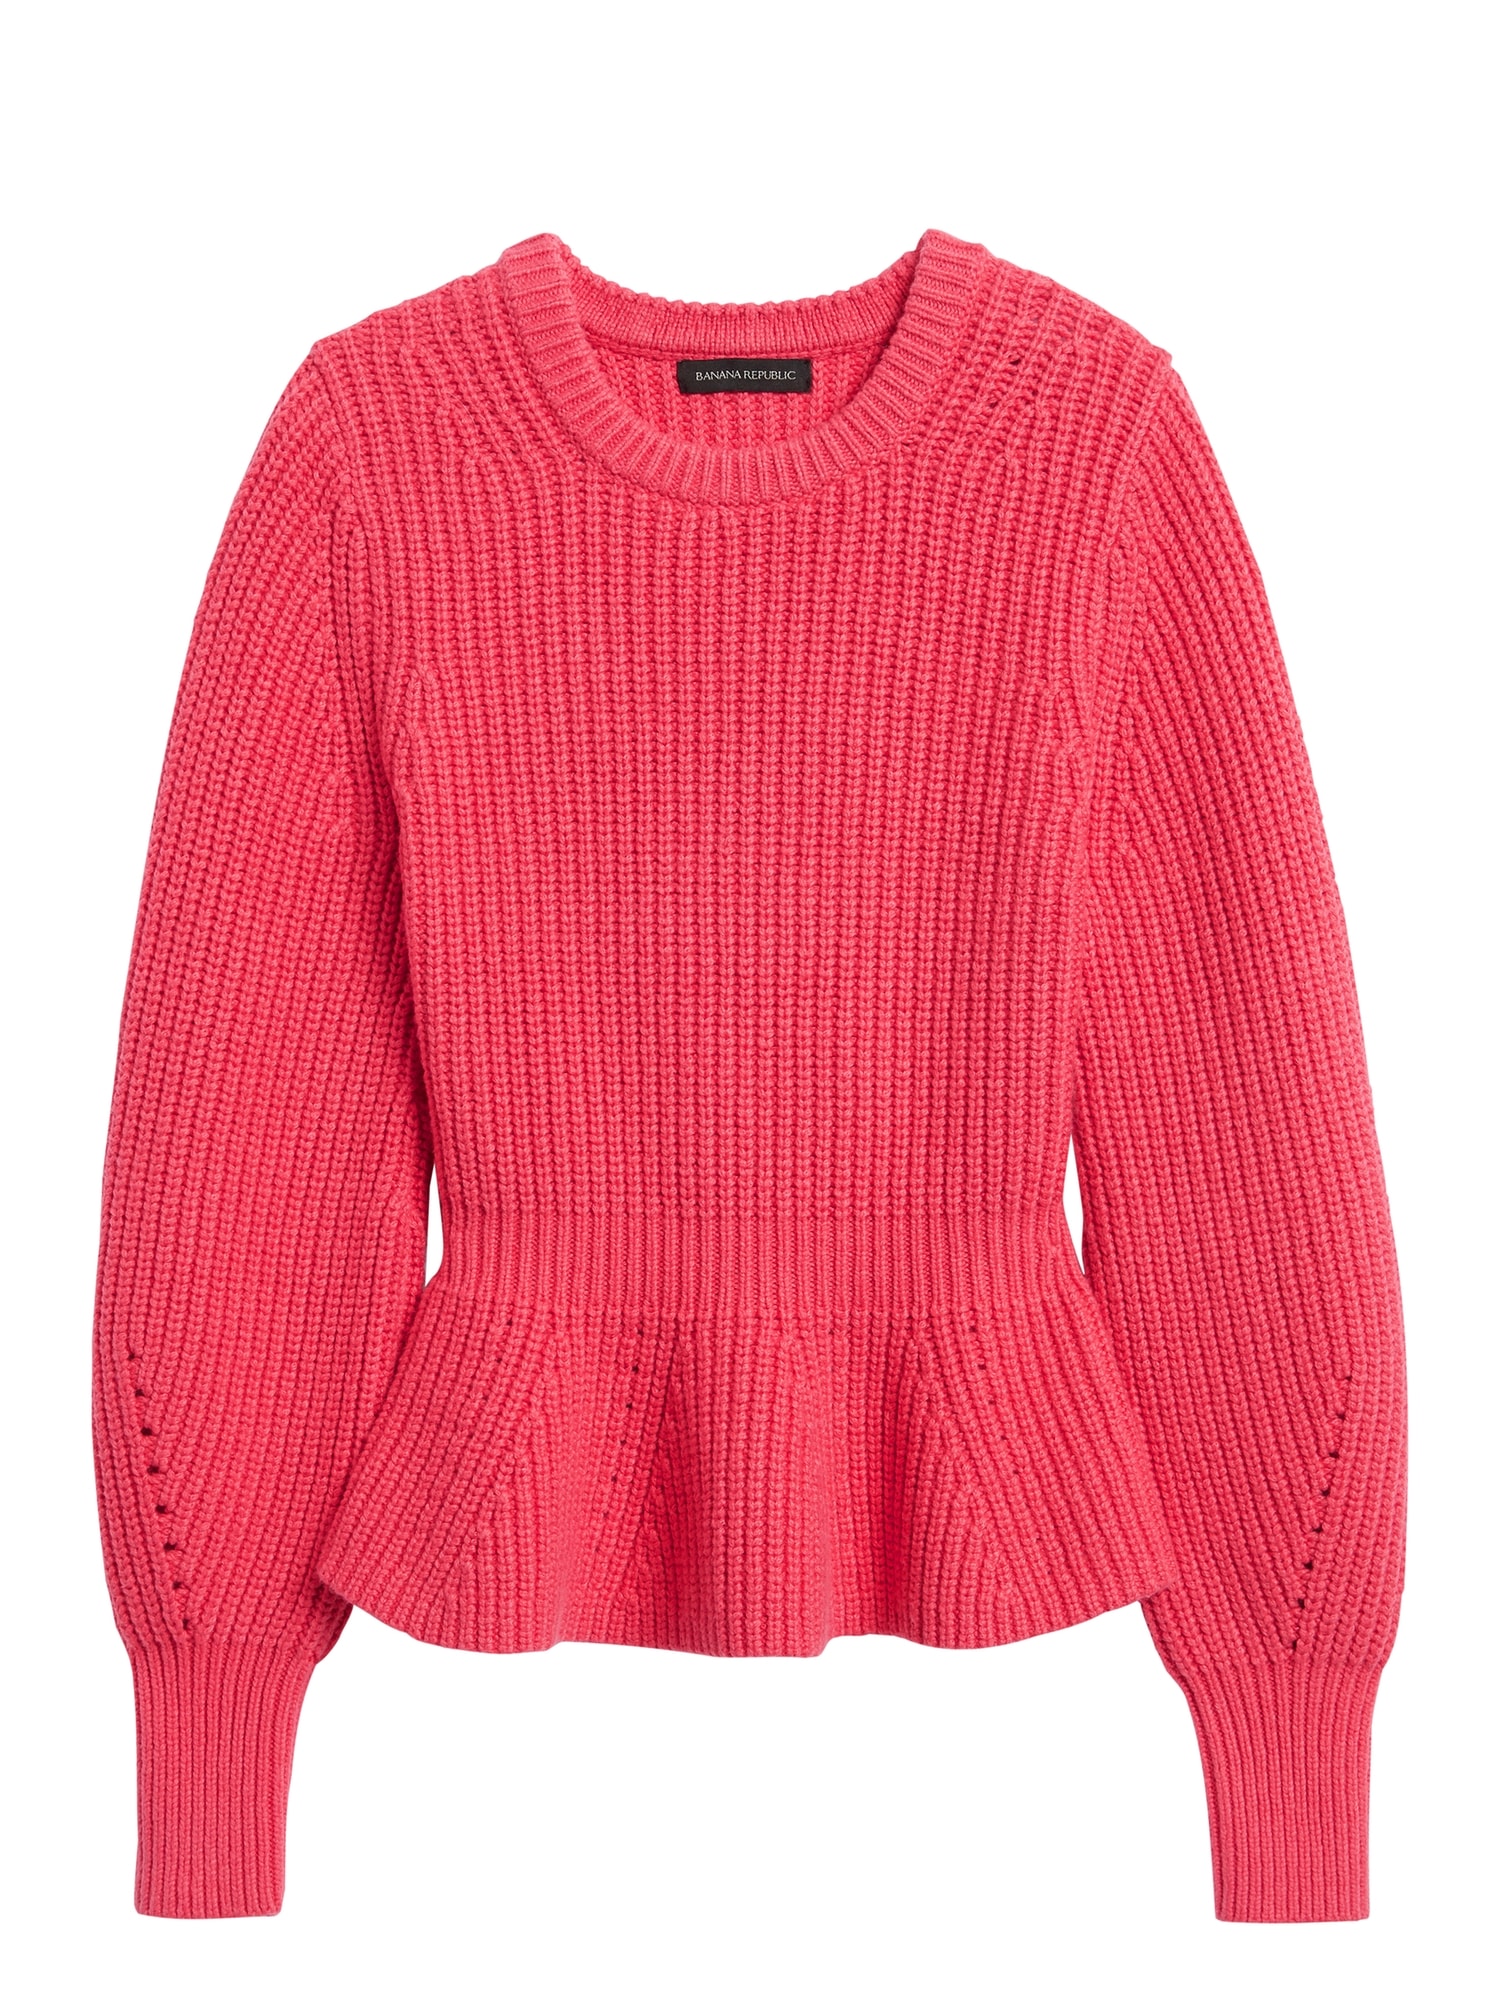 Peplum Cropped Sweater